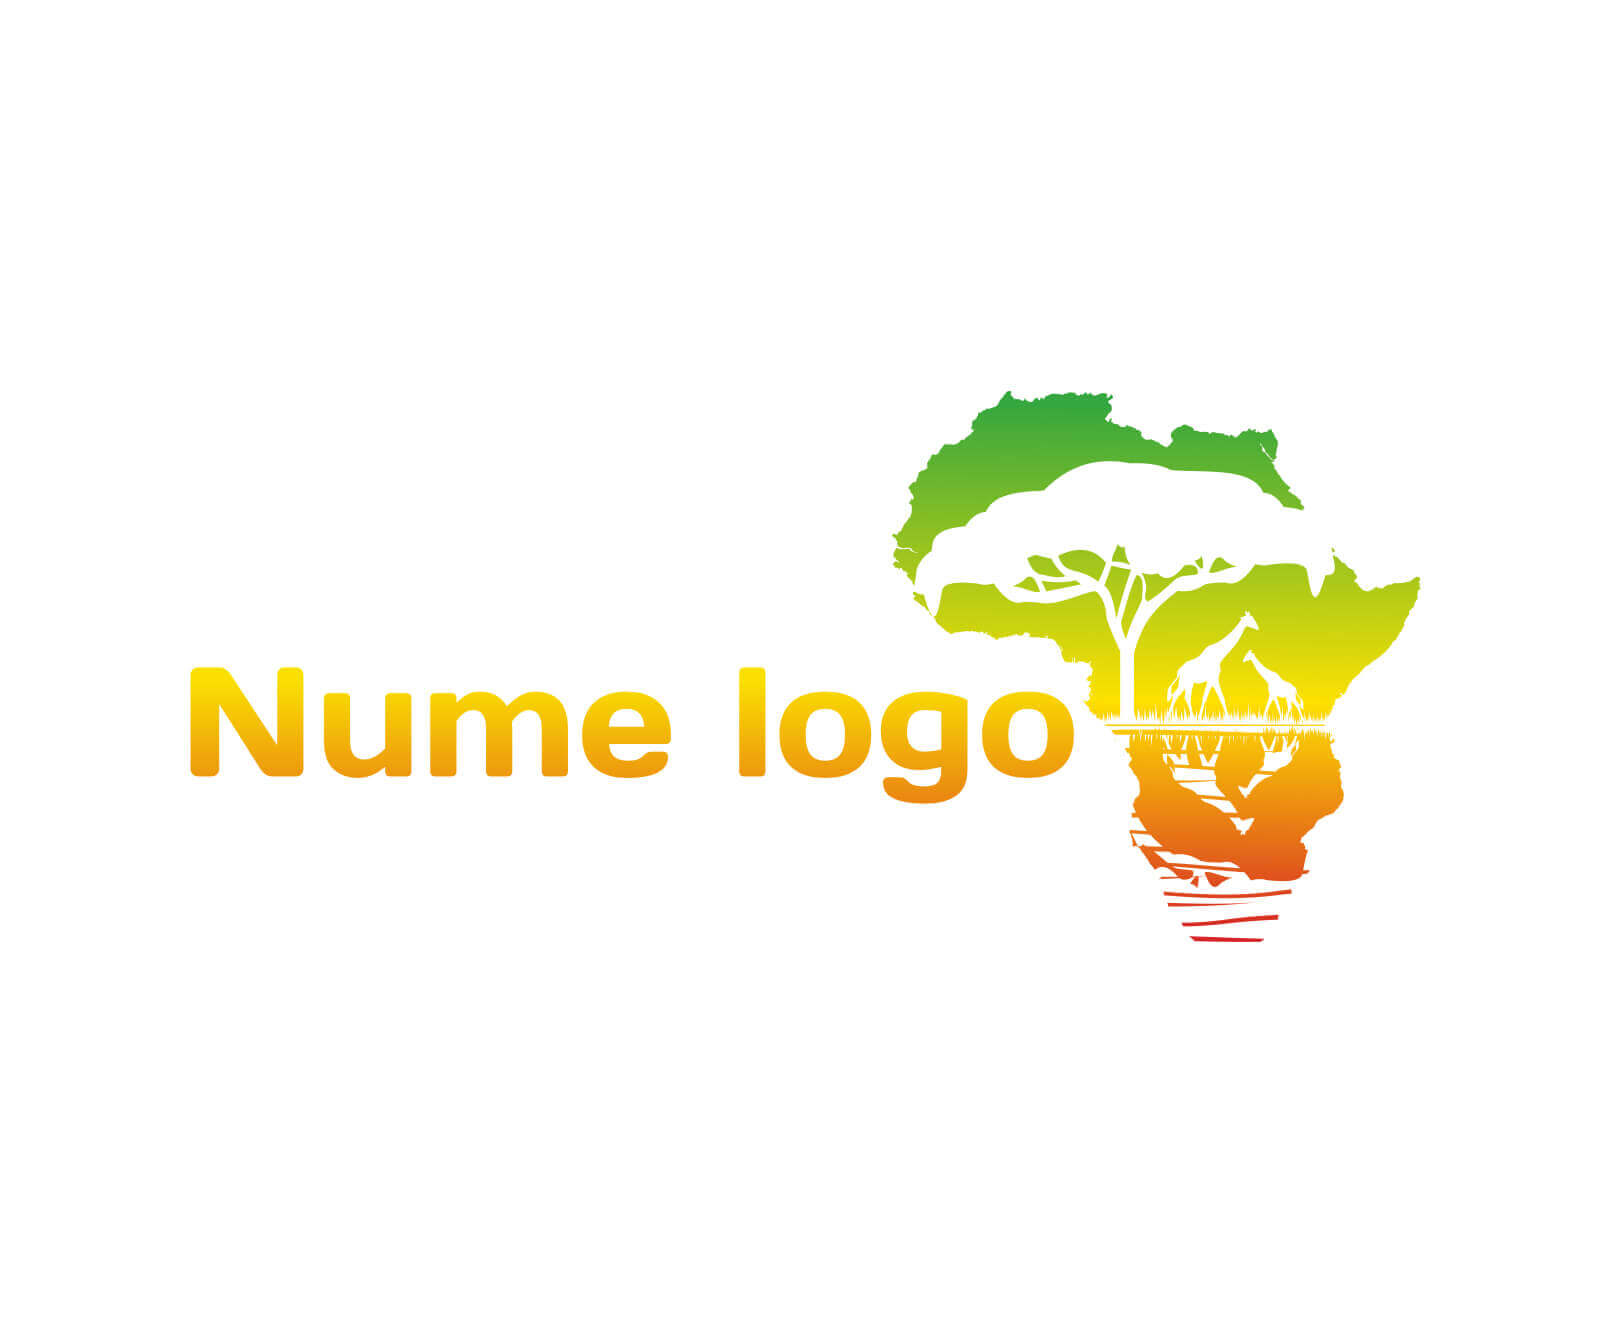 logo africa